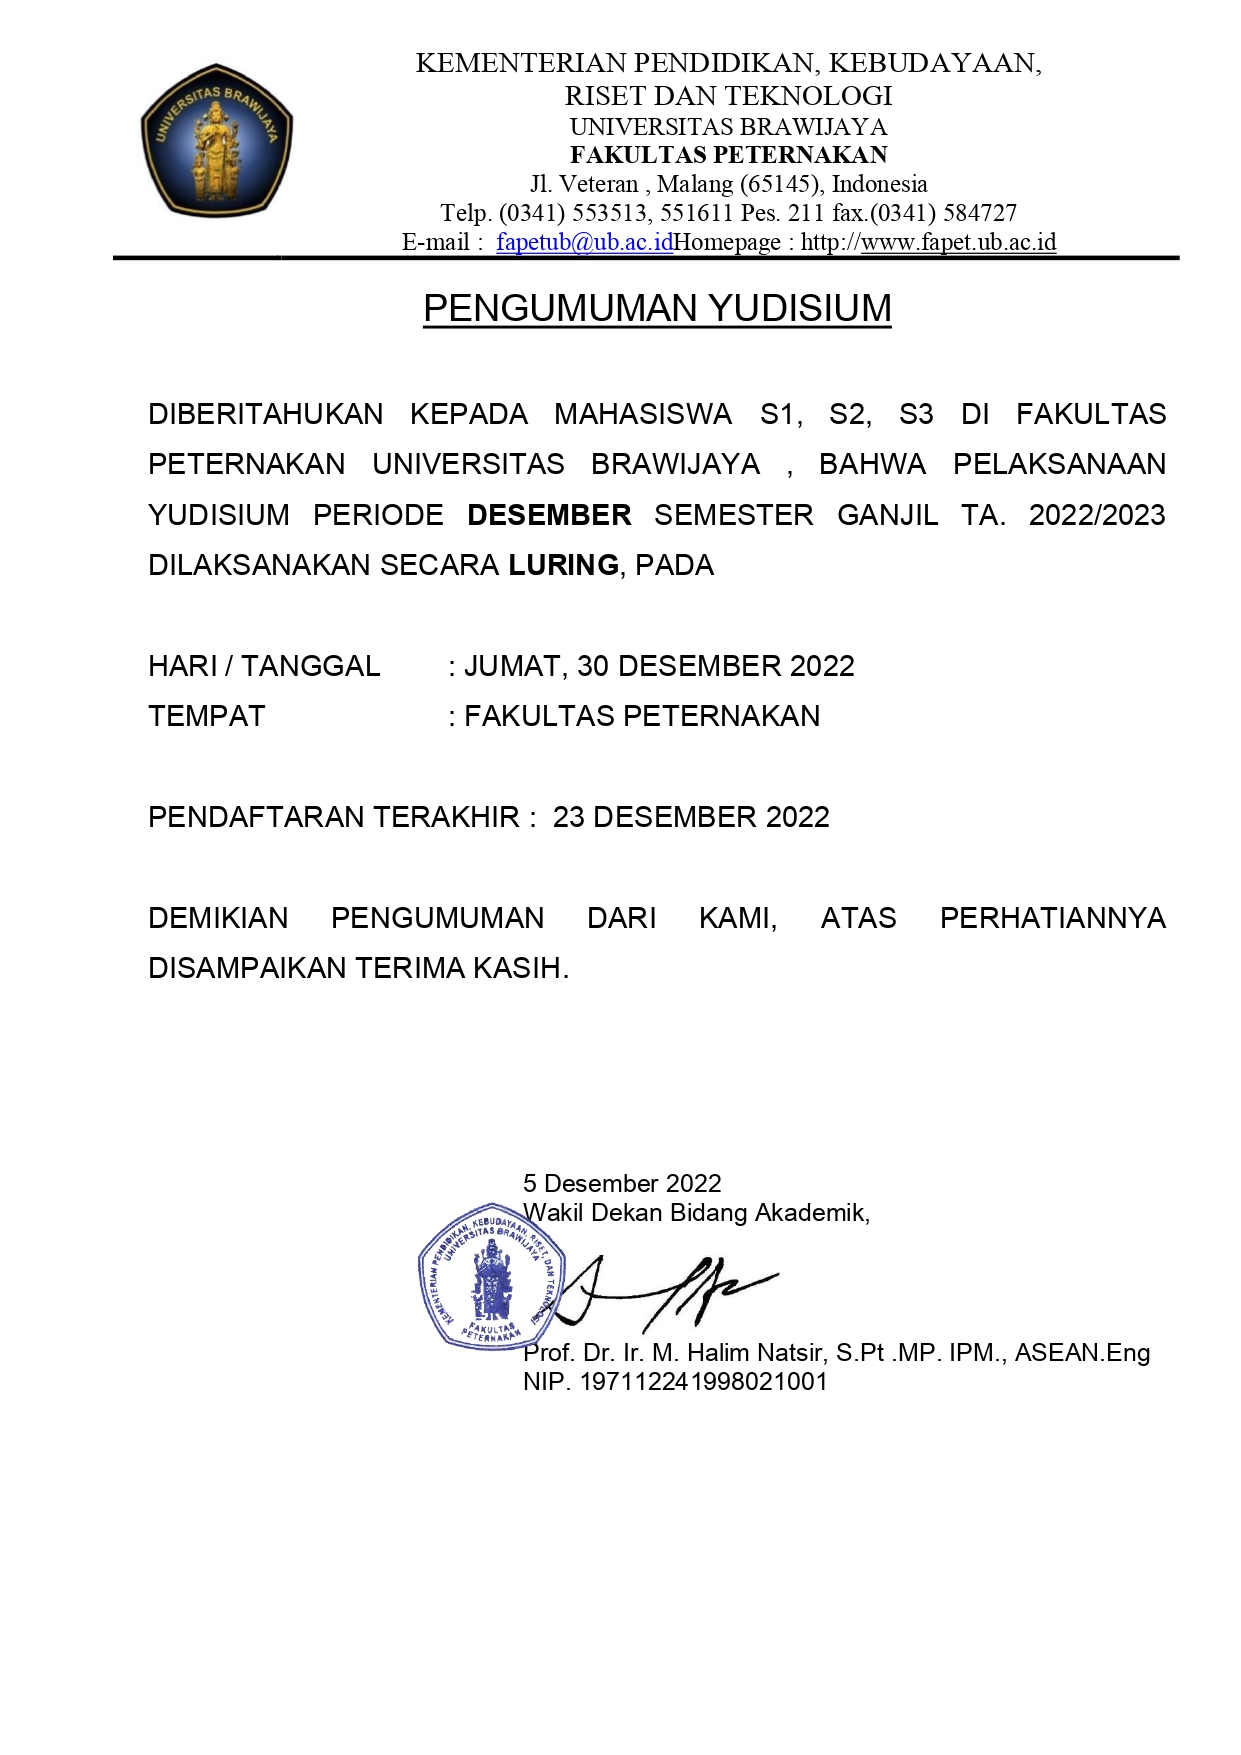 Pengumuman Pelaksanaan Yudisium Periode Desember 2022